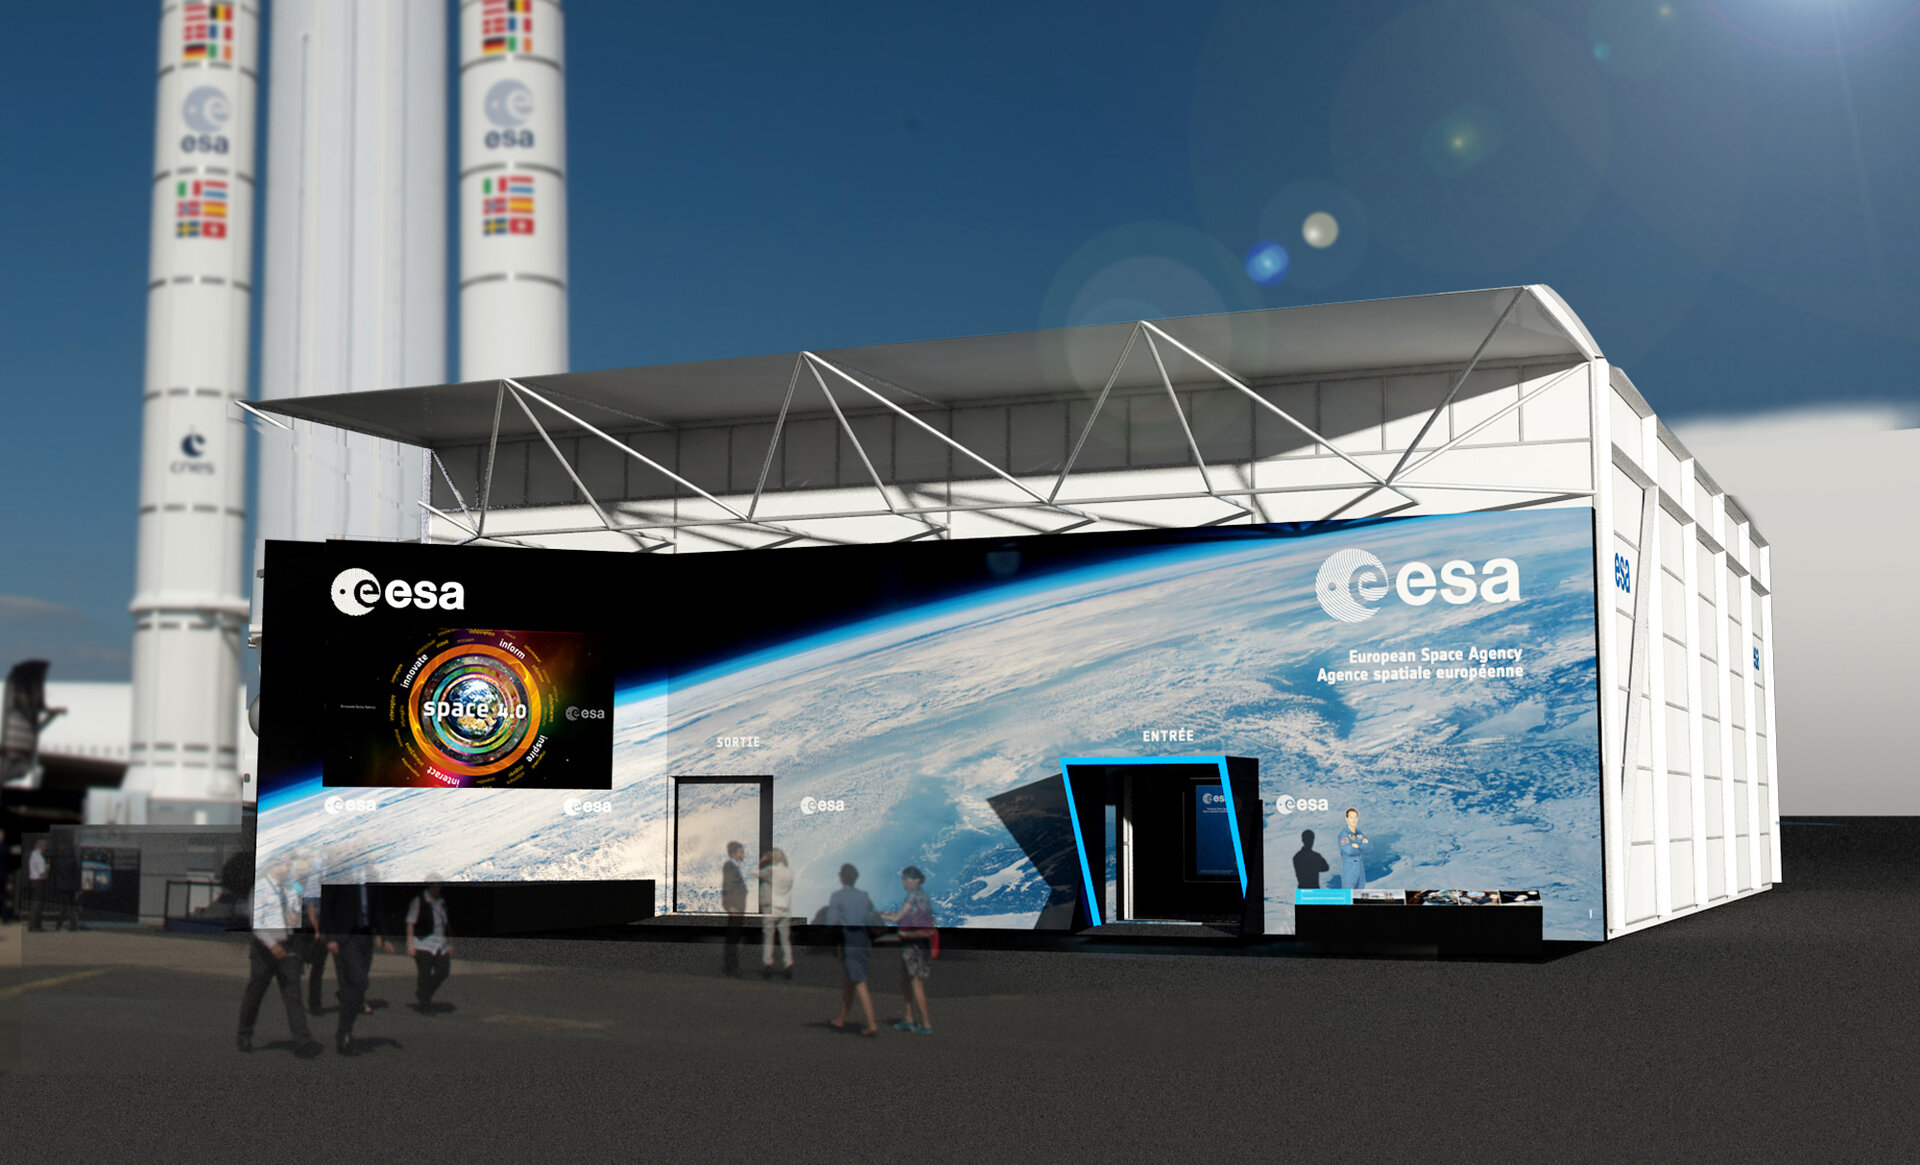 The ESA pavilion at this year’s Paris Air & Space show